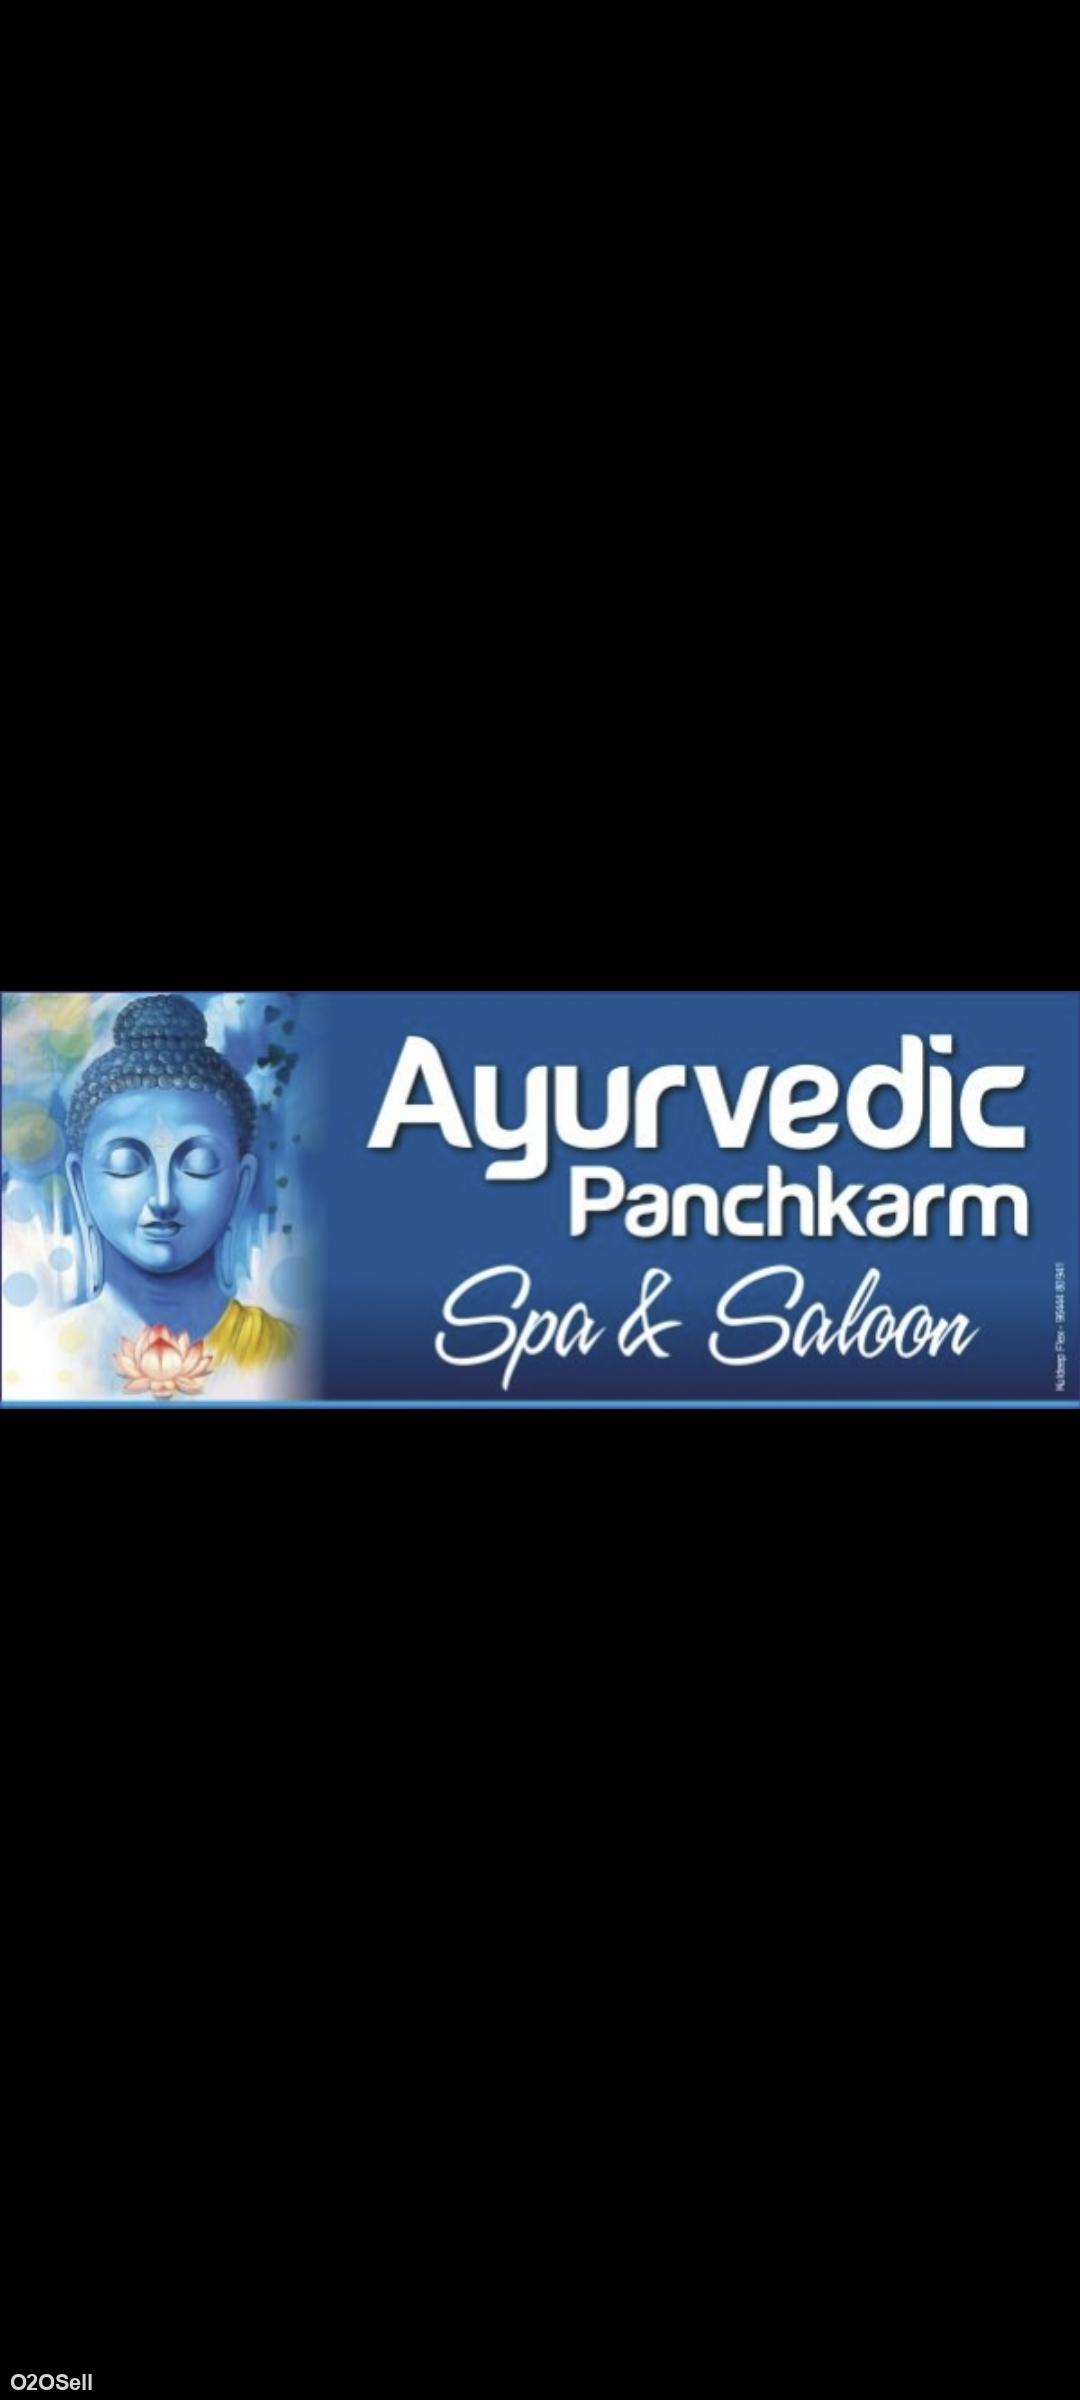 Pre Ayurvedic panchkrm Spa And spa - Cover Image